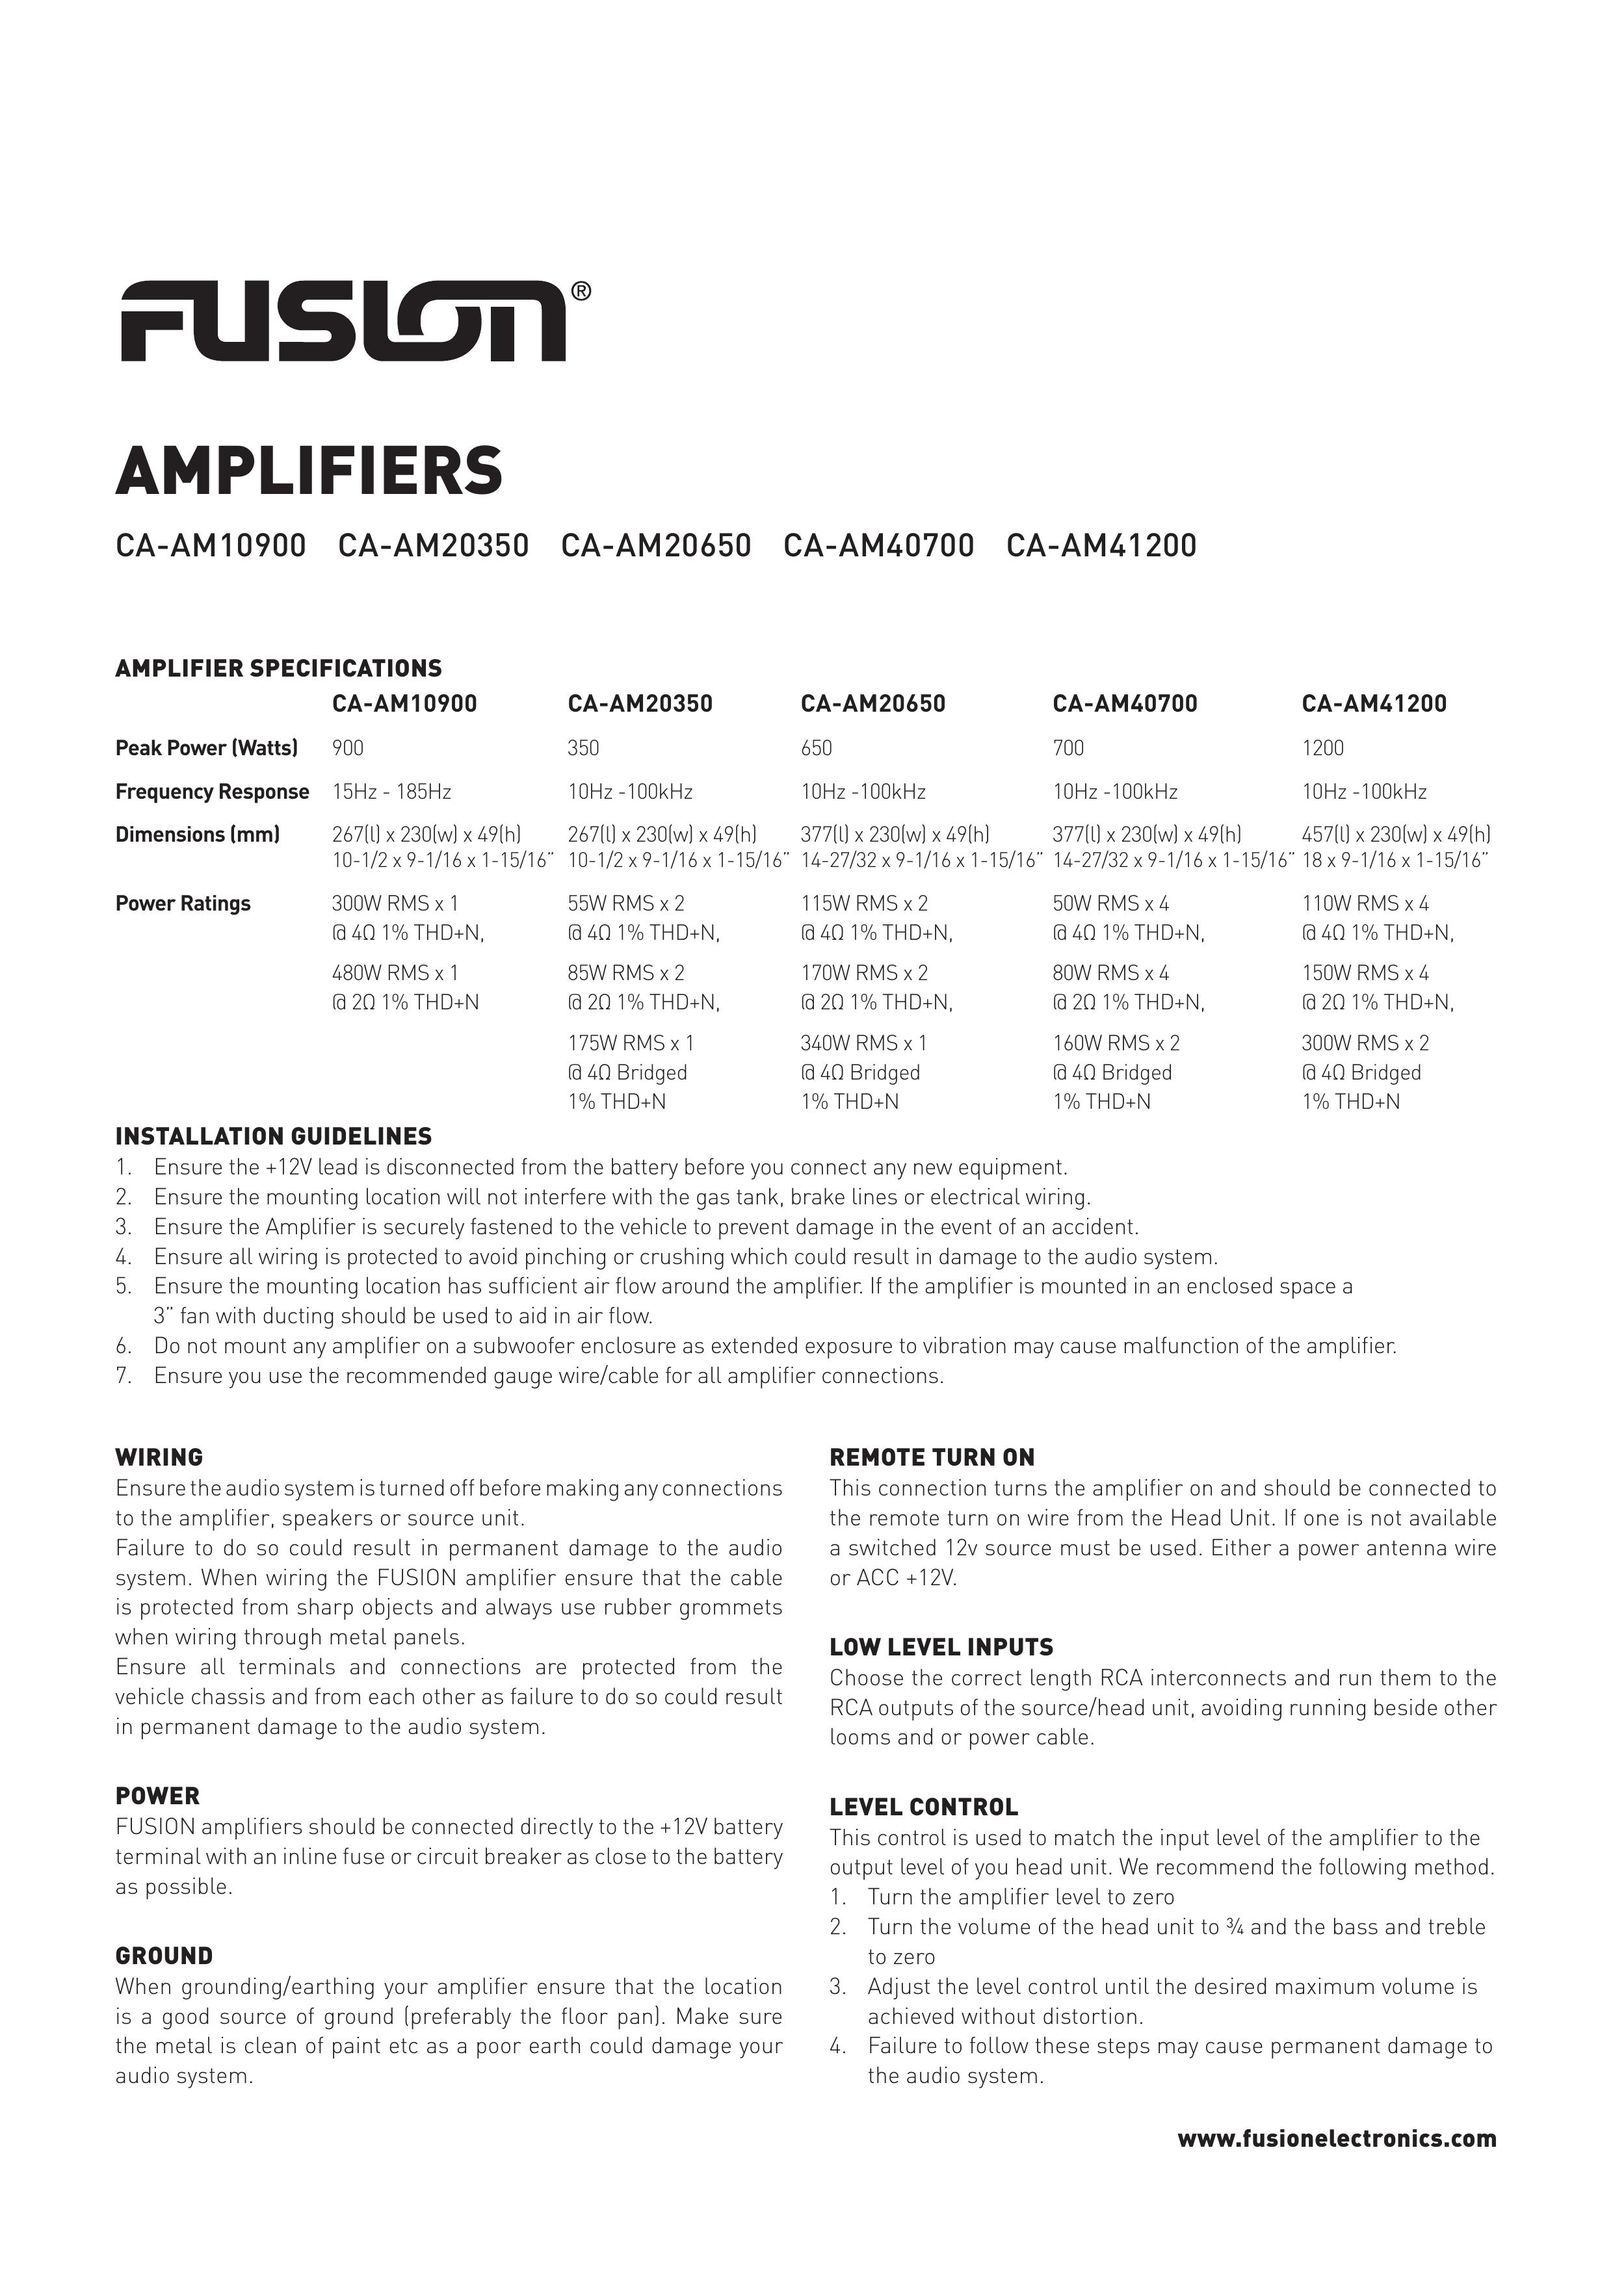 Fusion CA-AM20350 Car Amplifier User Manual